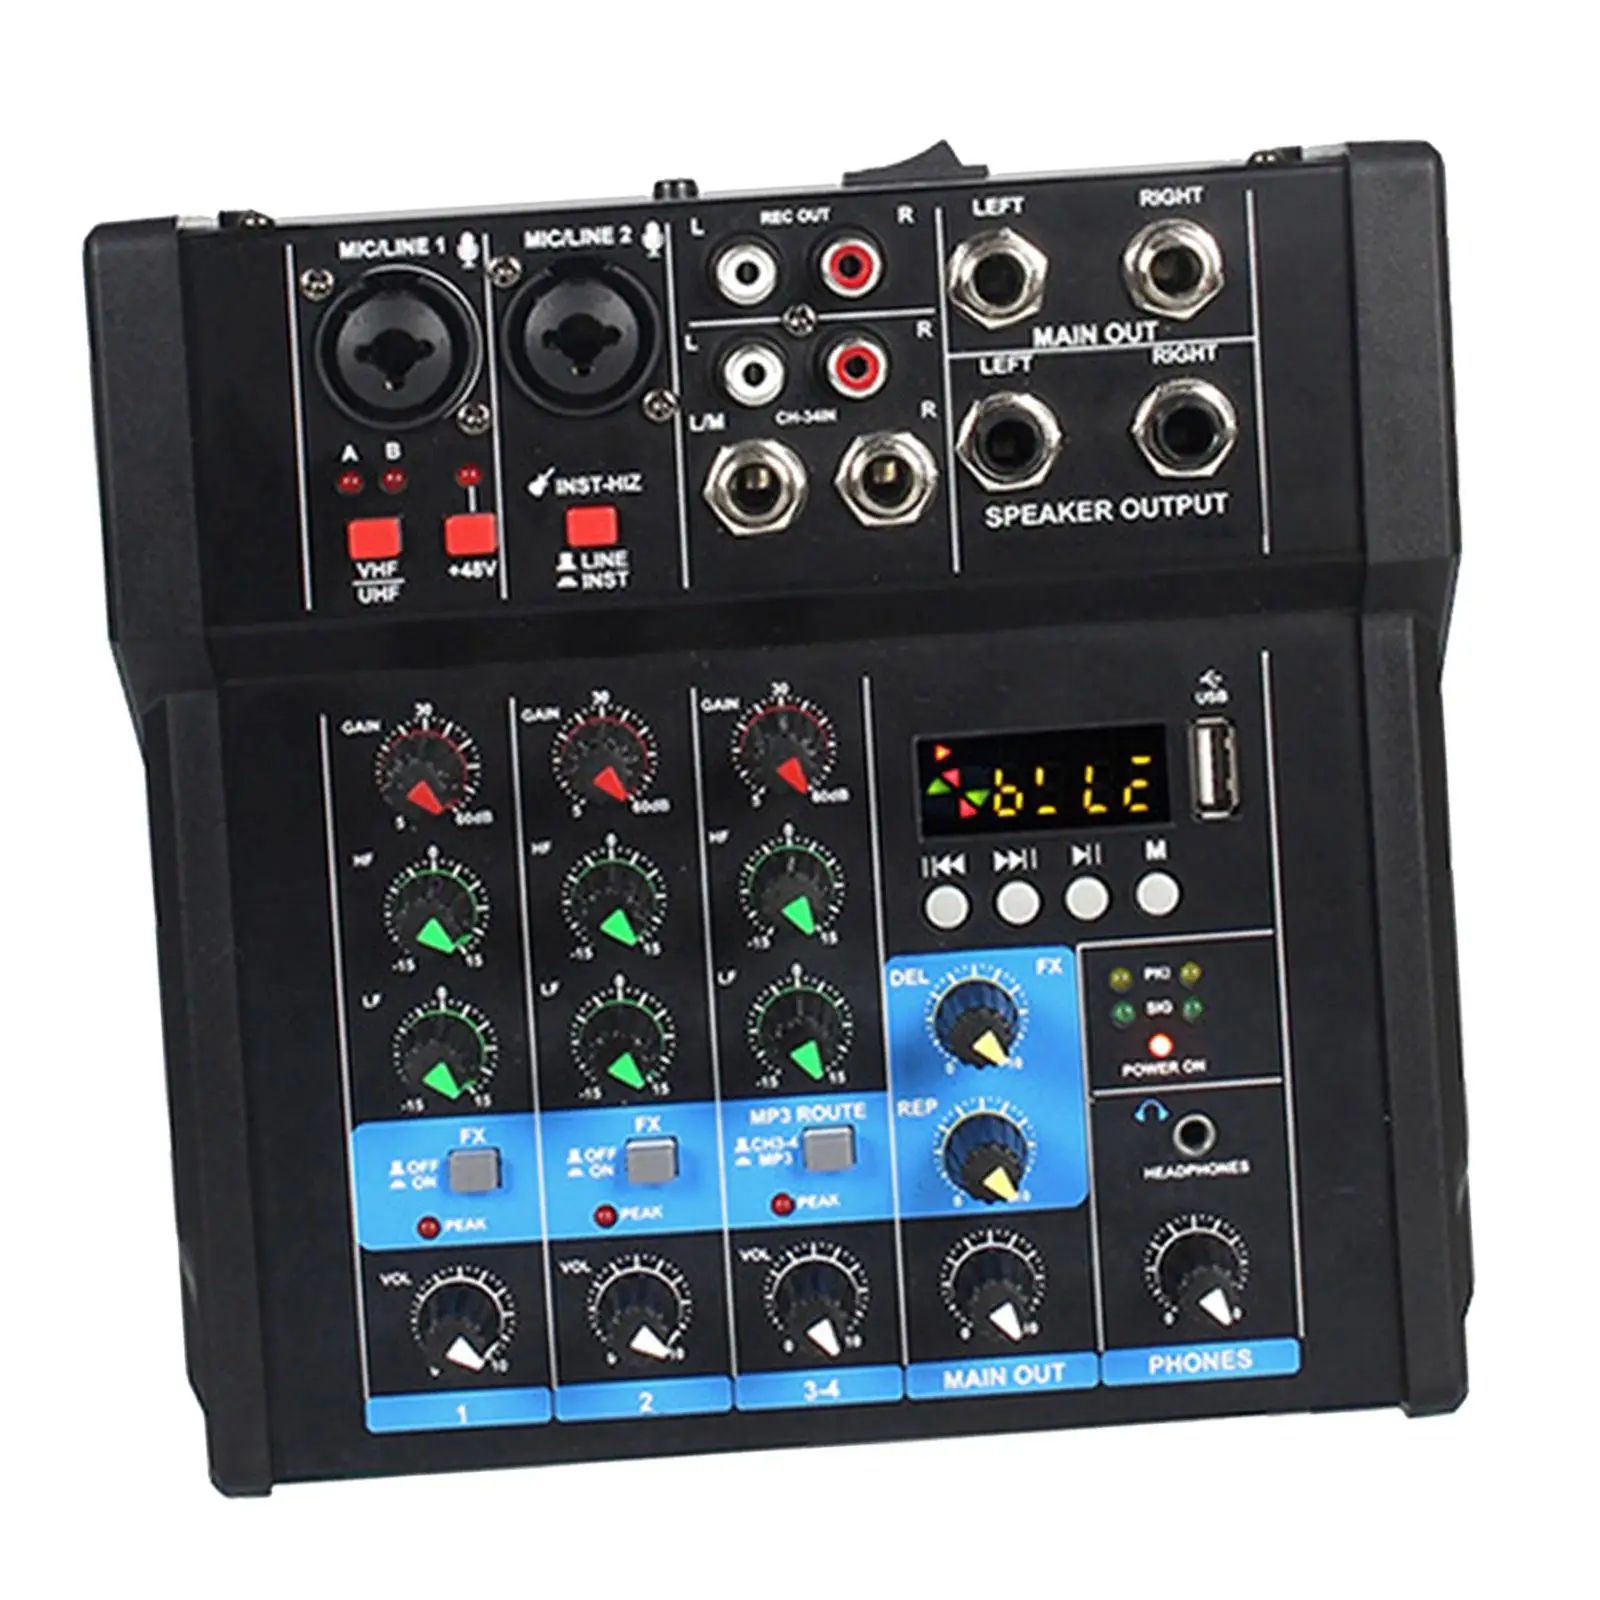 Audio Mixer Amplifier Professional 48V Phantom Power Portable Sound Mixing Console for DJ Mixing Home Karaoke Studio Recording